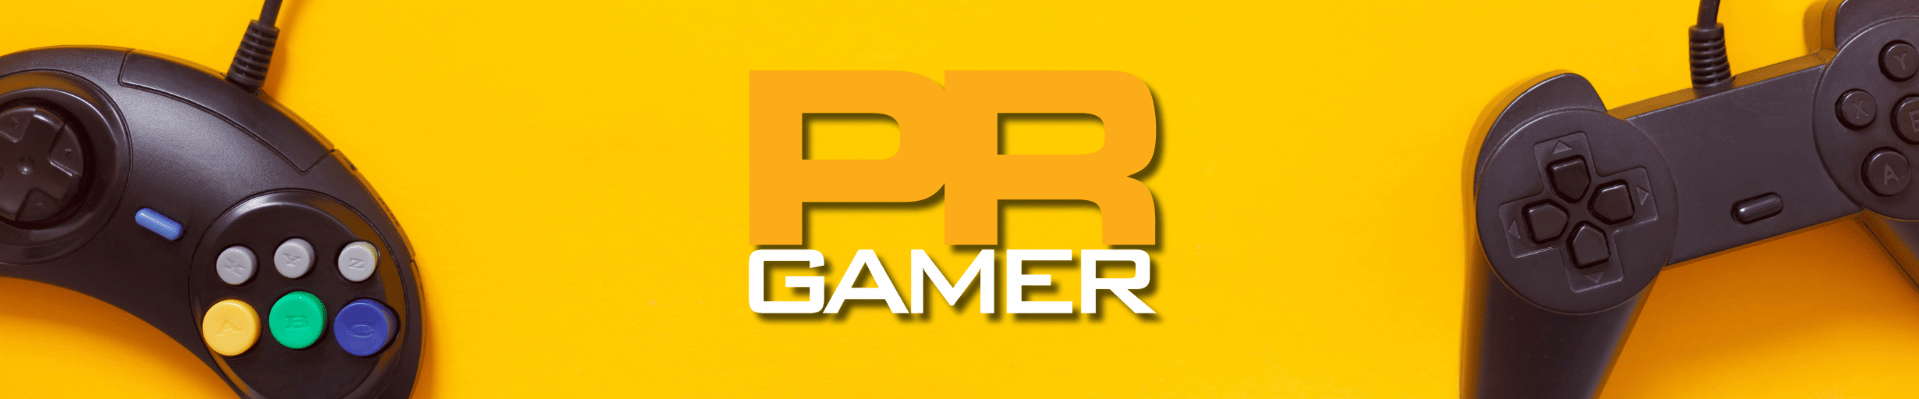 PR-Gamer